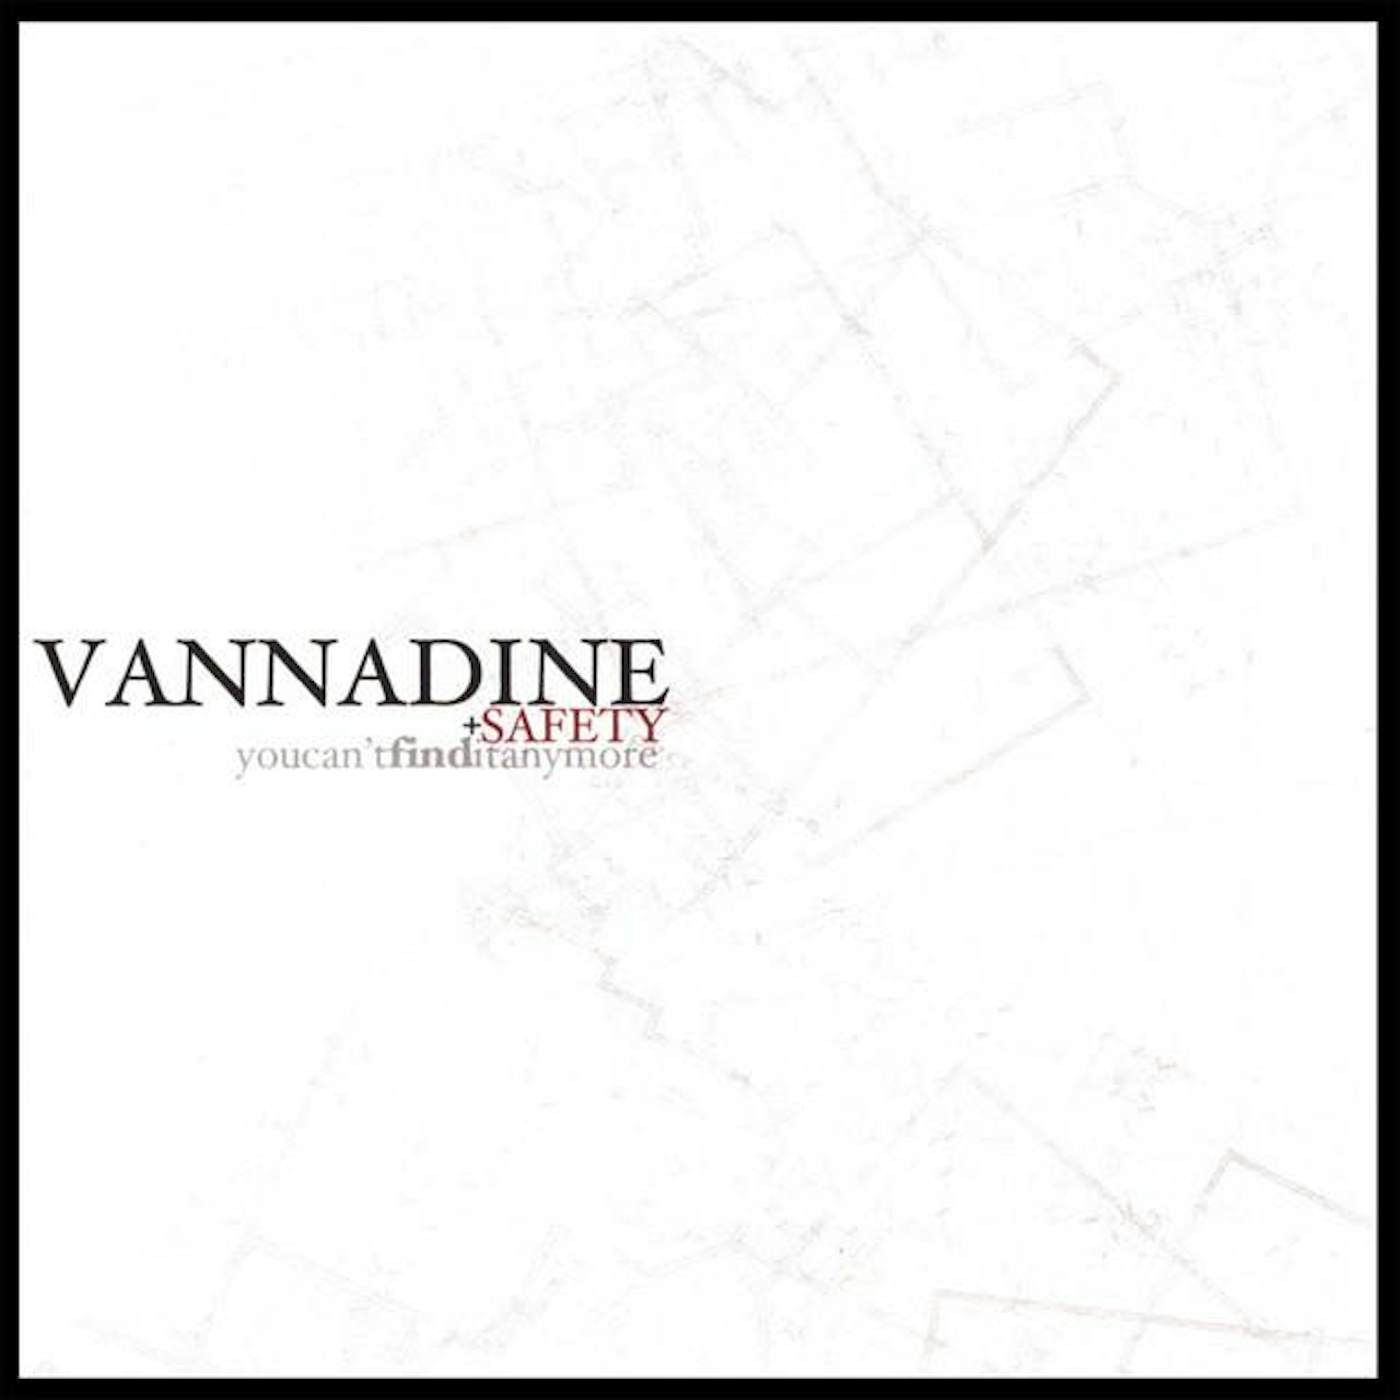 Vannadine